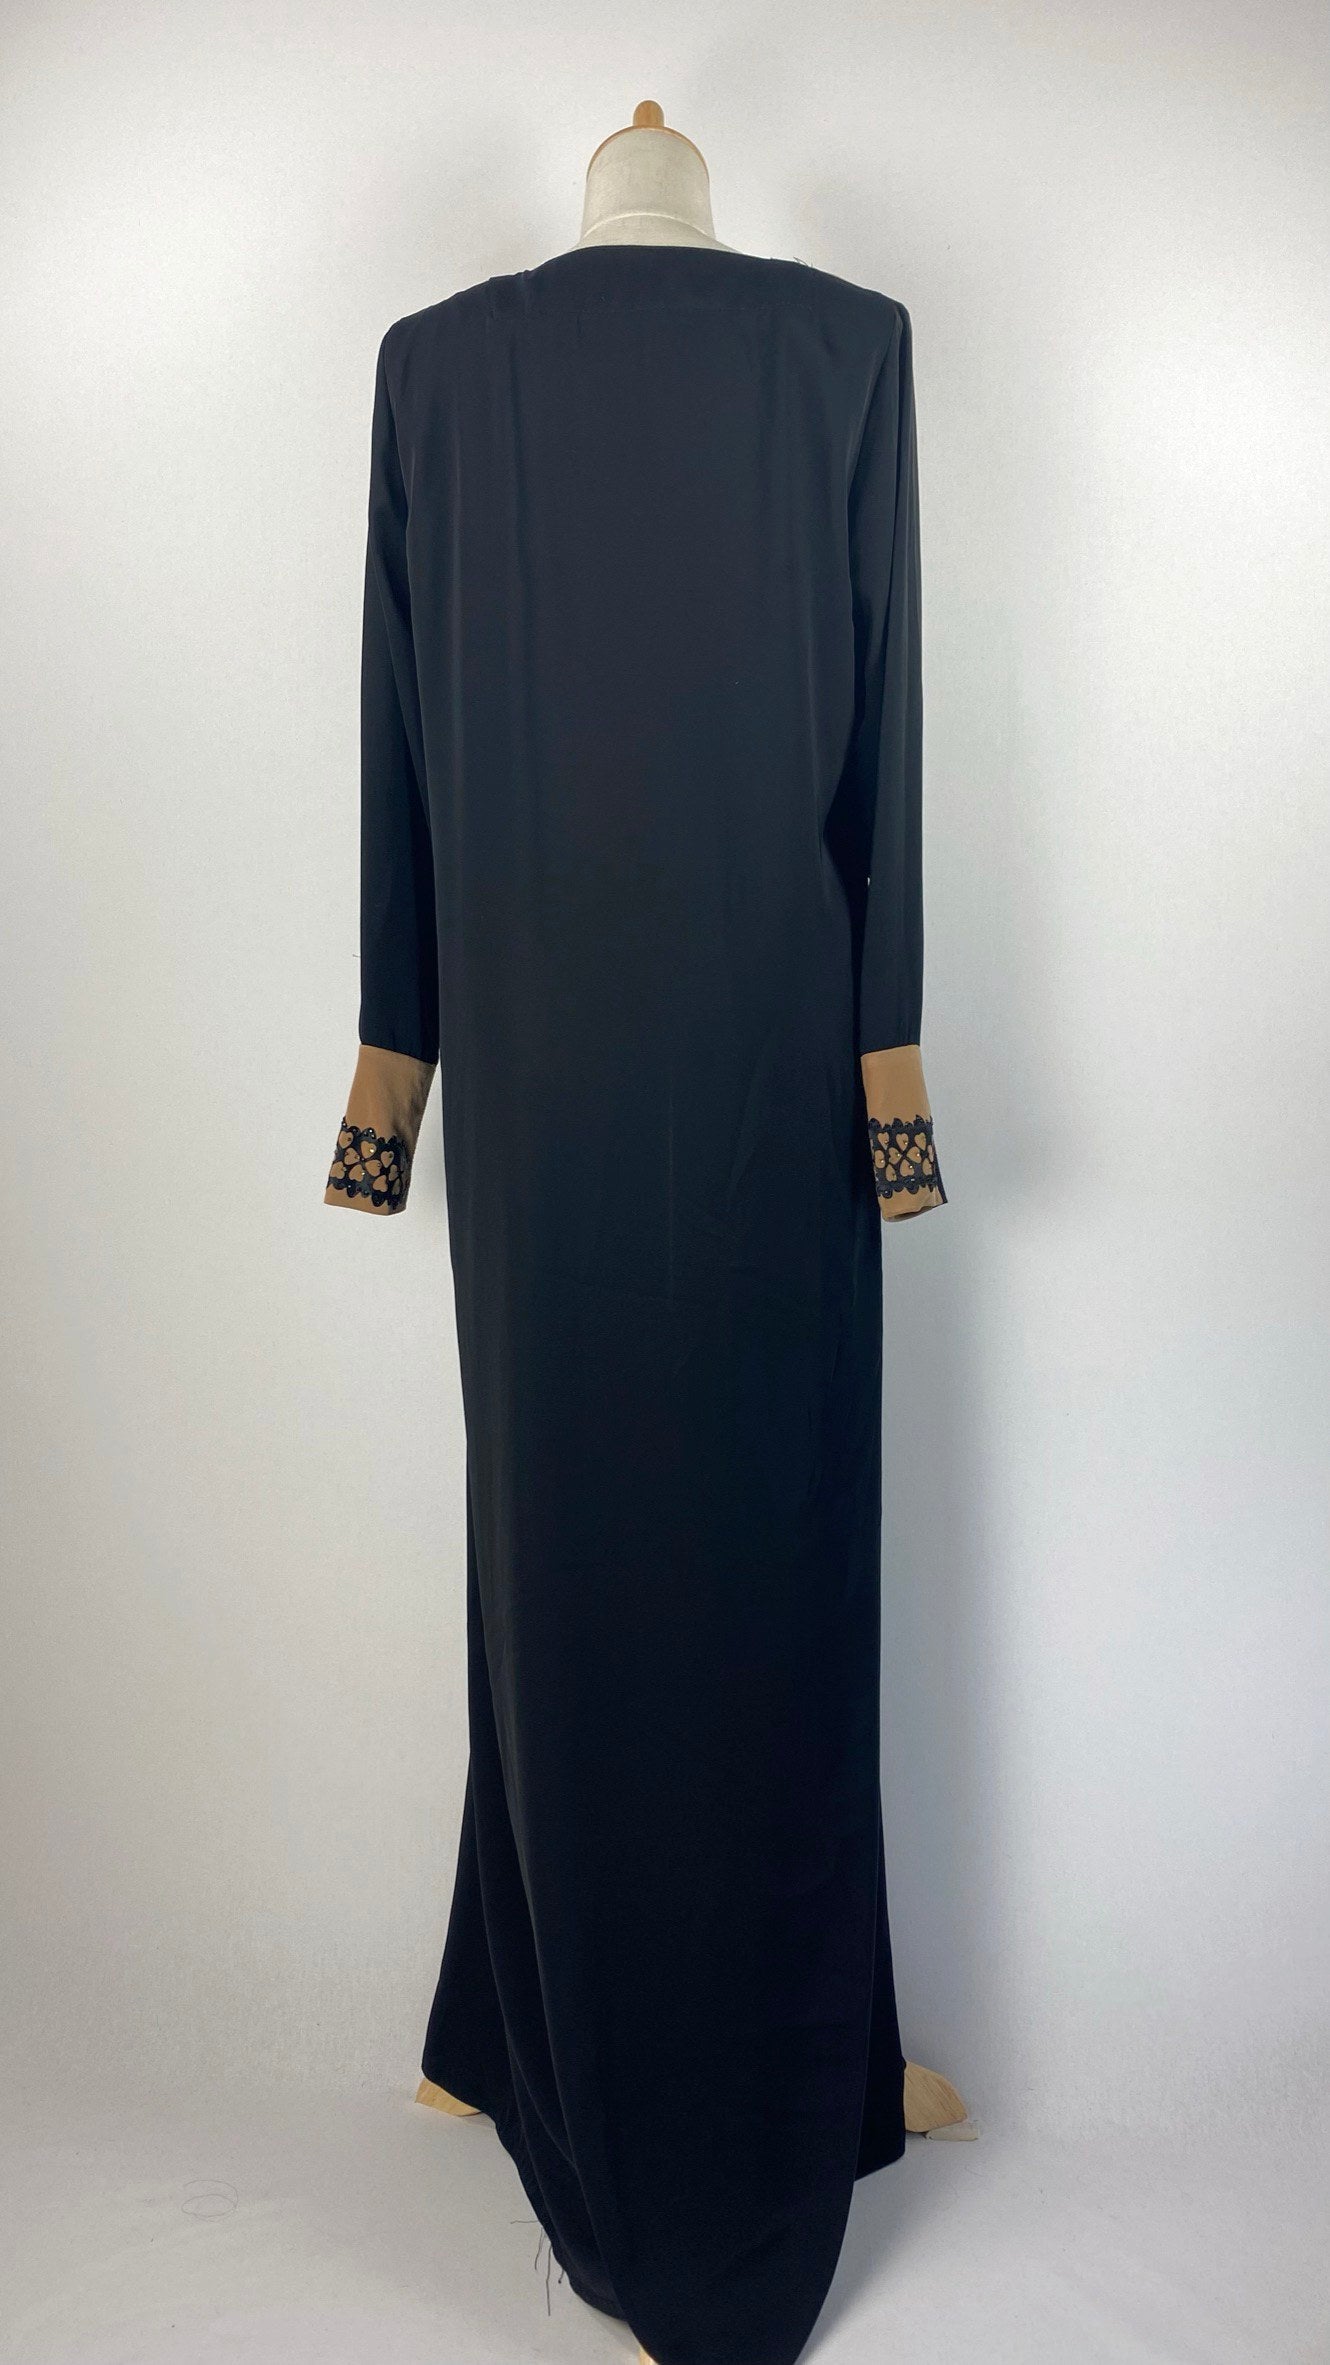 Long Sleeve Closed Abaya, Black and Camel